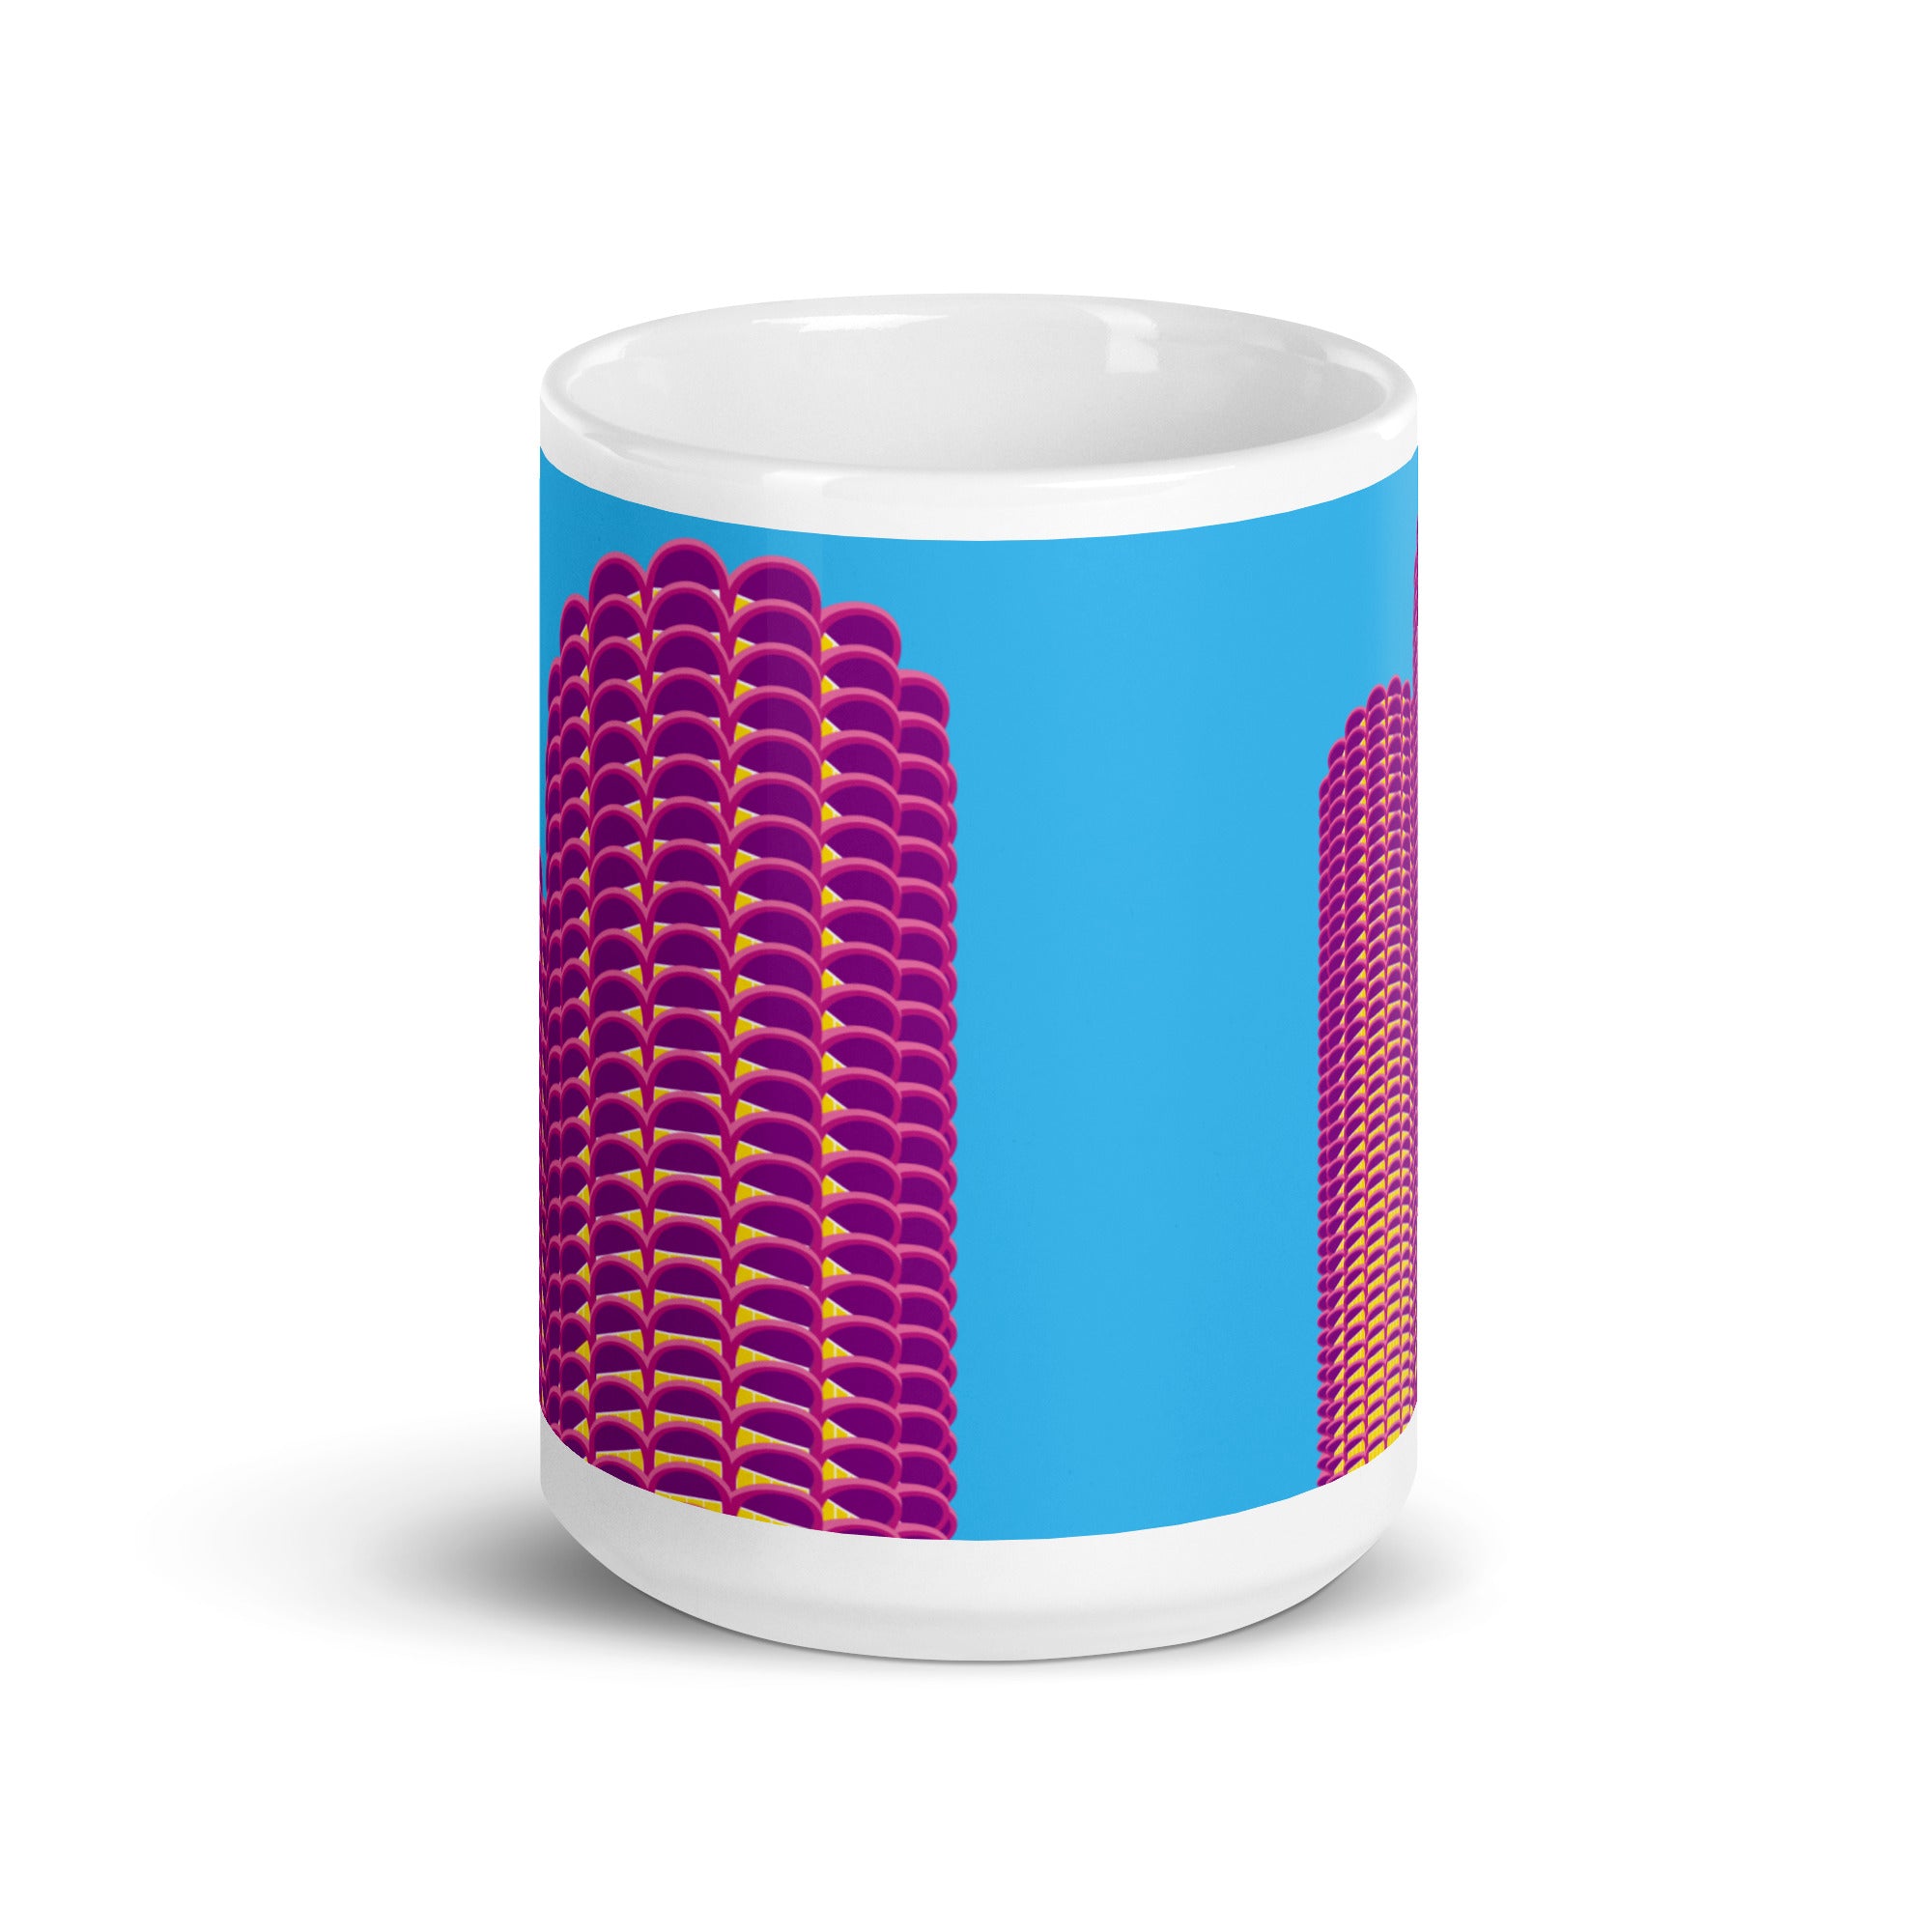 Marina City Colour Mug